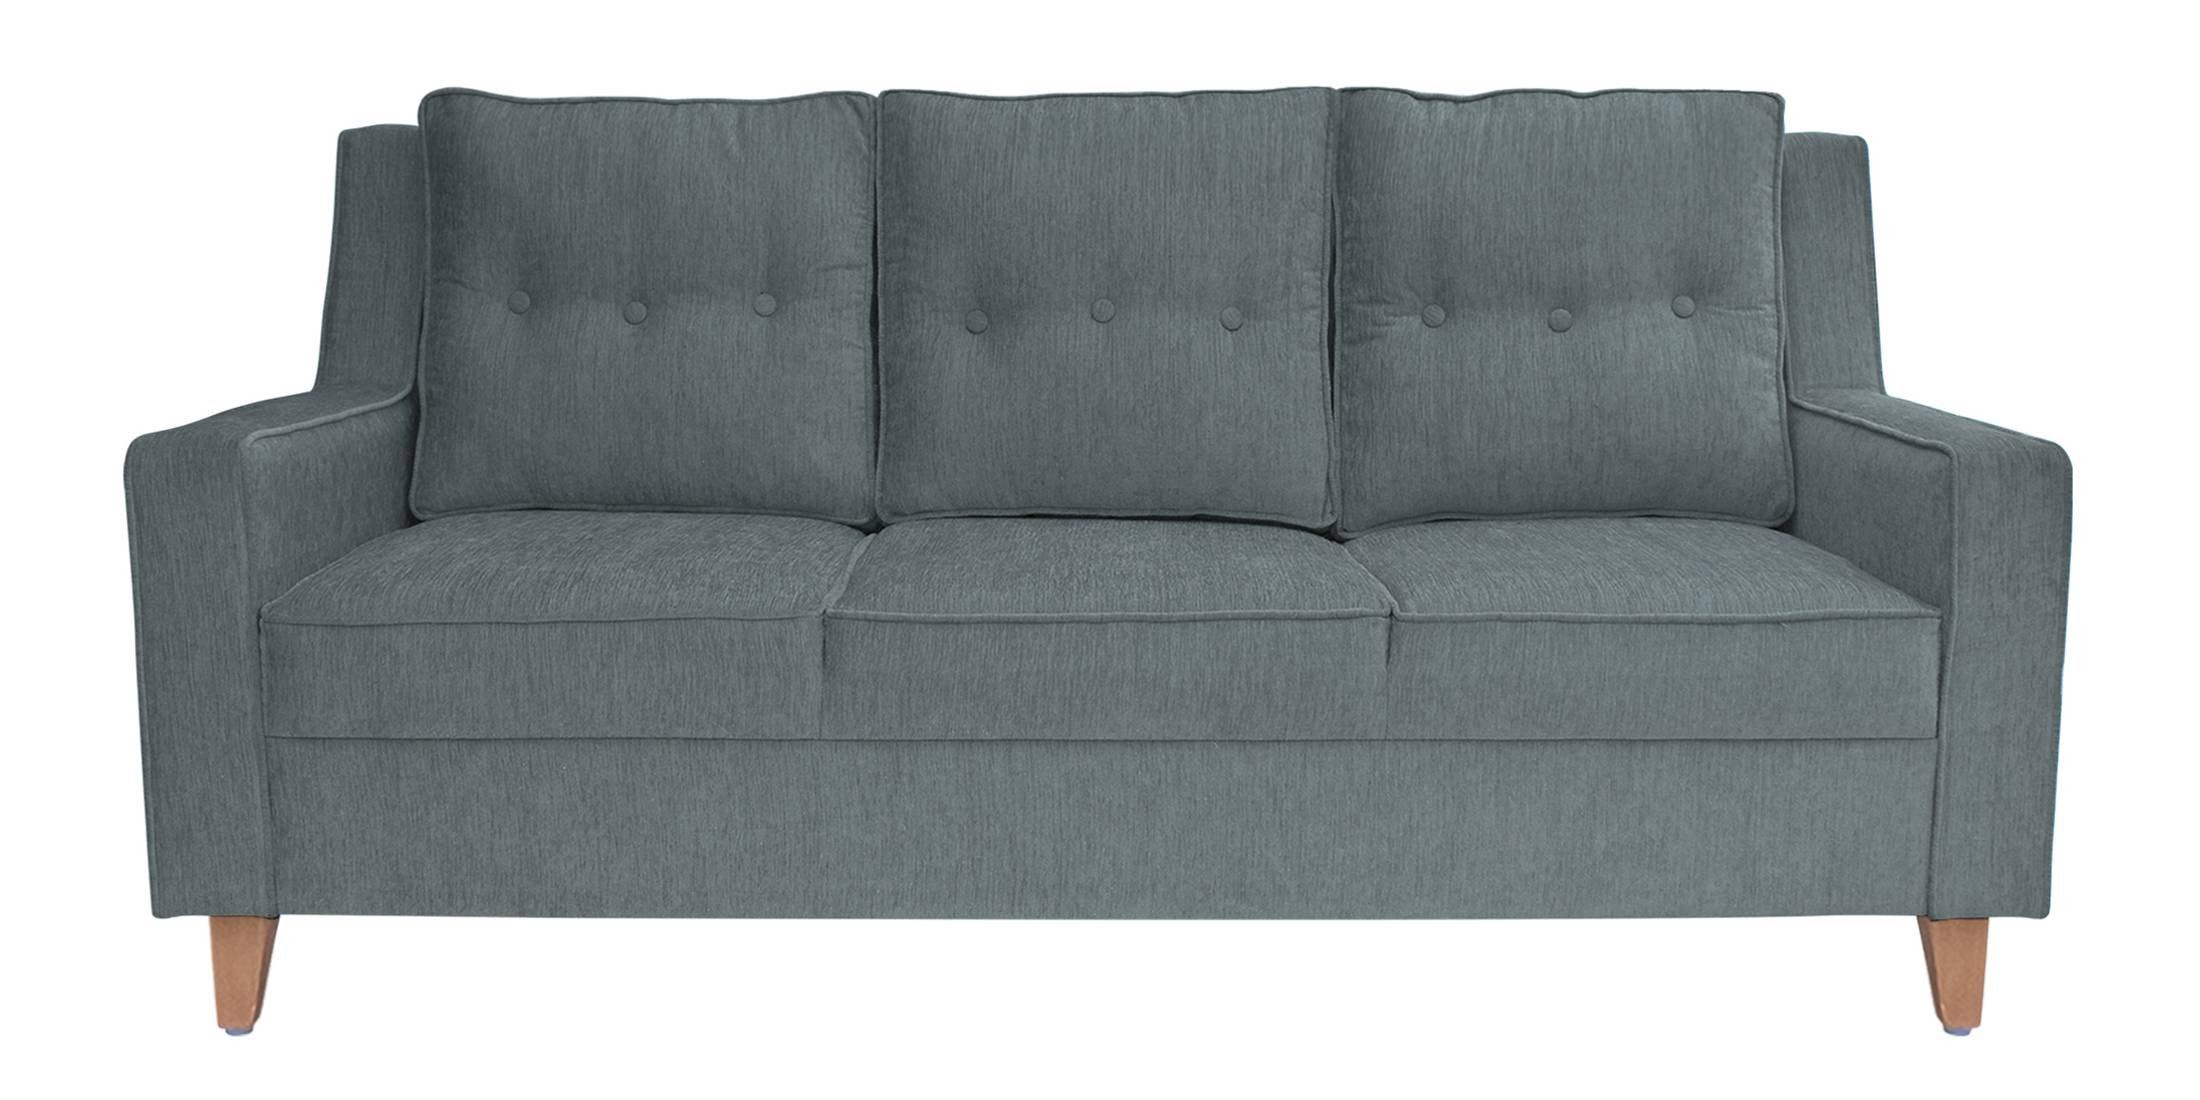 Santiago Fabric Sofa (Grey) (Grey, 3-seater Custom Set - Sofas, None Standard Set - Sofas, Fabric Sofa Material, Regular Sofa Size, Regular Sofa Type) by Urban Ladder - - 